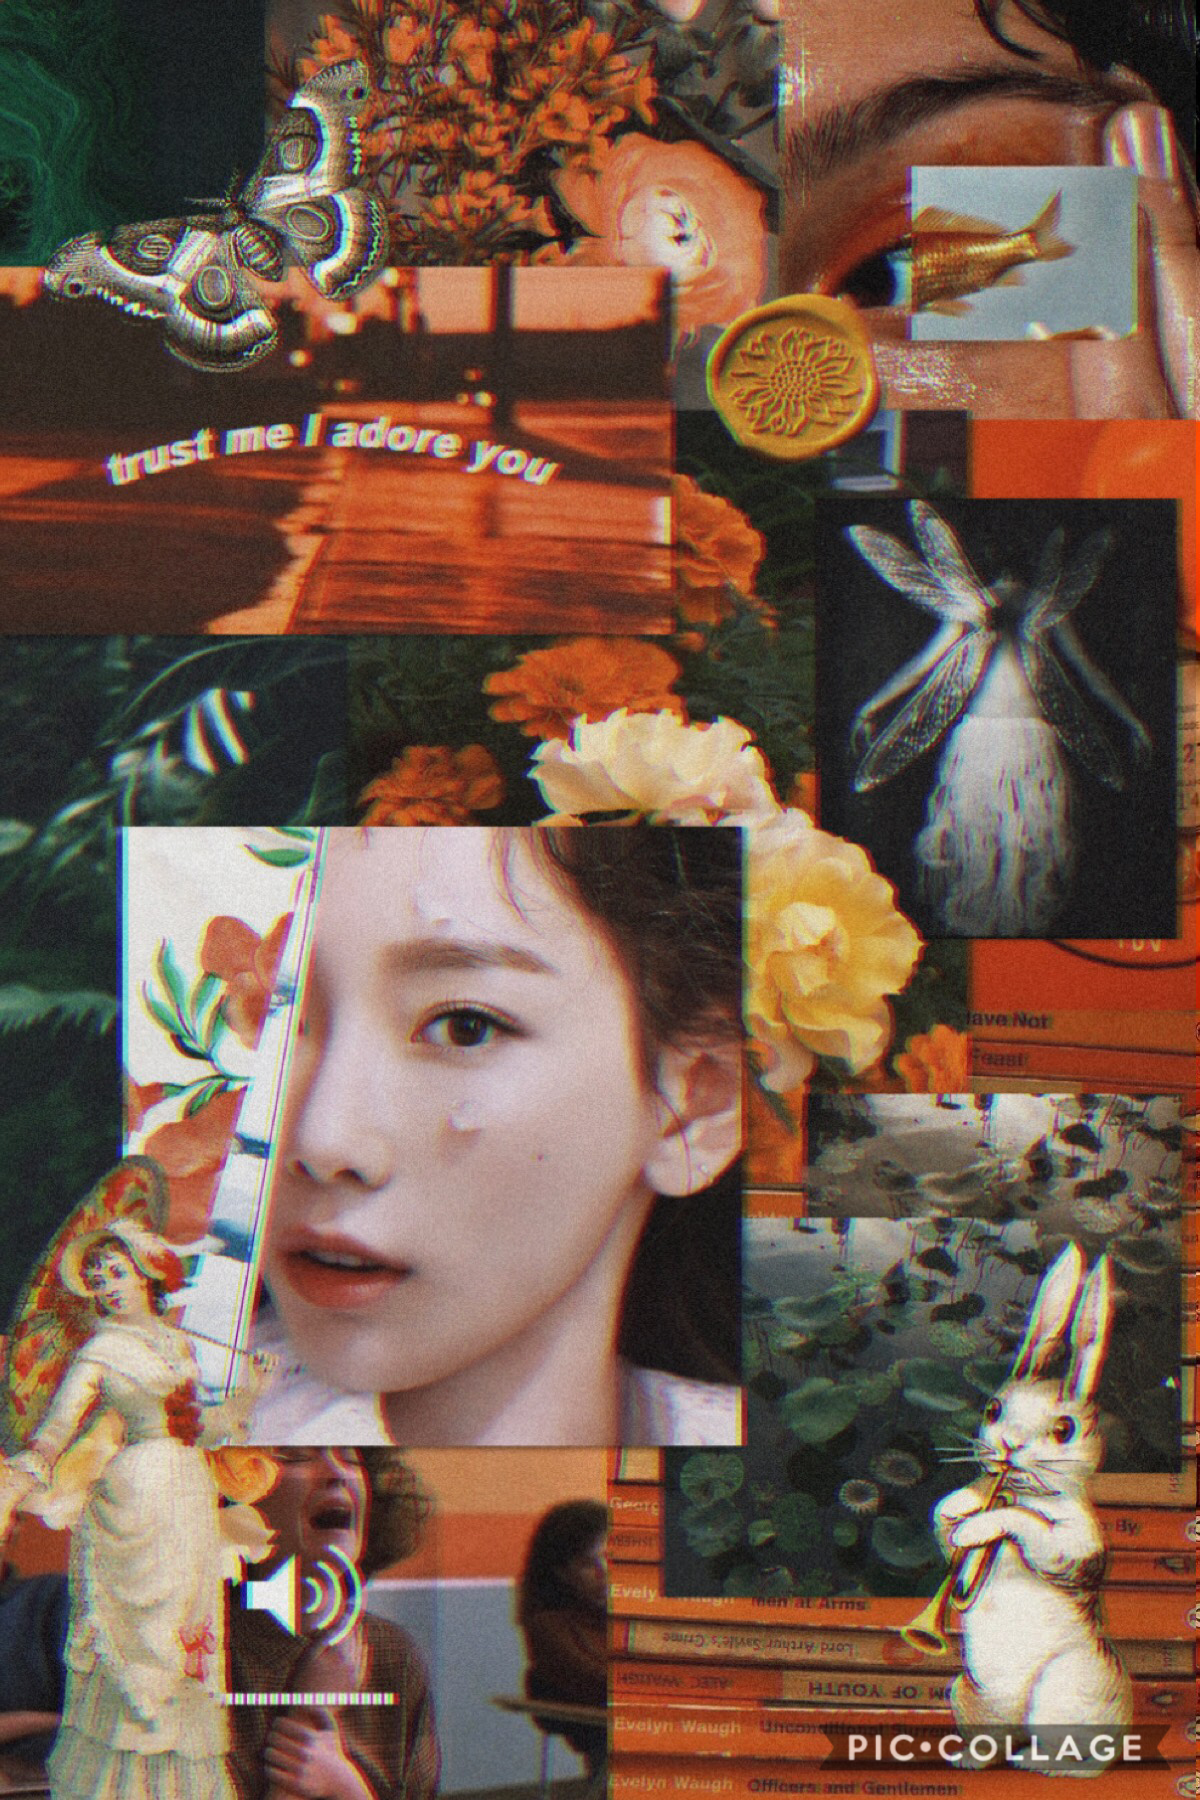 🐇🍂 𝒸𝓁𝒾𝒸𝓀 𝒽𝑒𝓇🍂🐇
Ｏ(≧▽≦)Ｏ  - ♡´･ᴗ･`♡ 
Kim Taeyeon | #aesthetic #vintage #orange #yellow #green #blackandwhite #fairy #ninfa #forest #butterfly #fish 